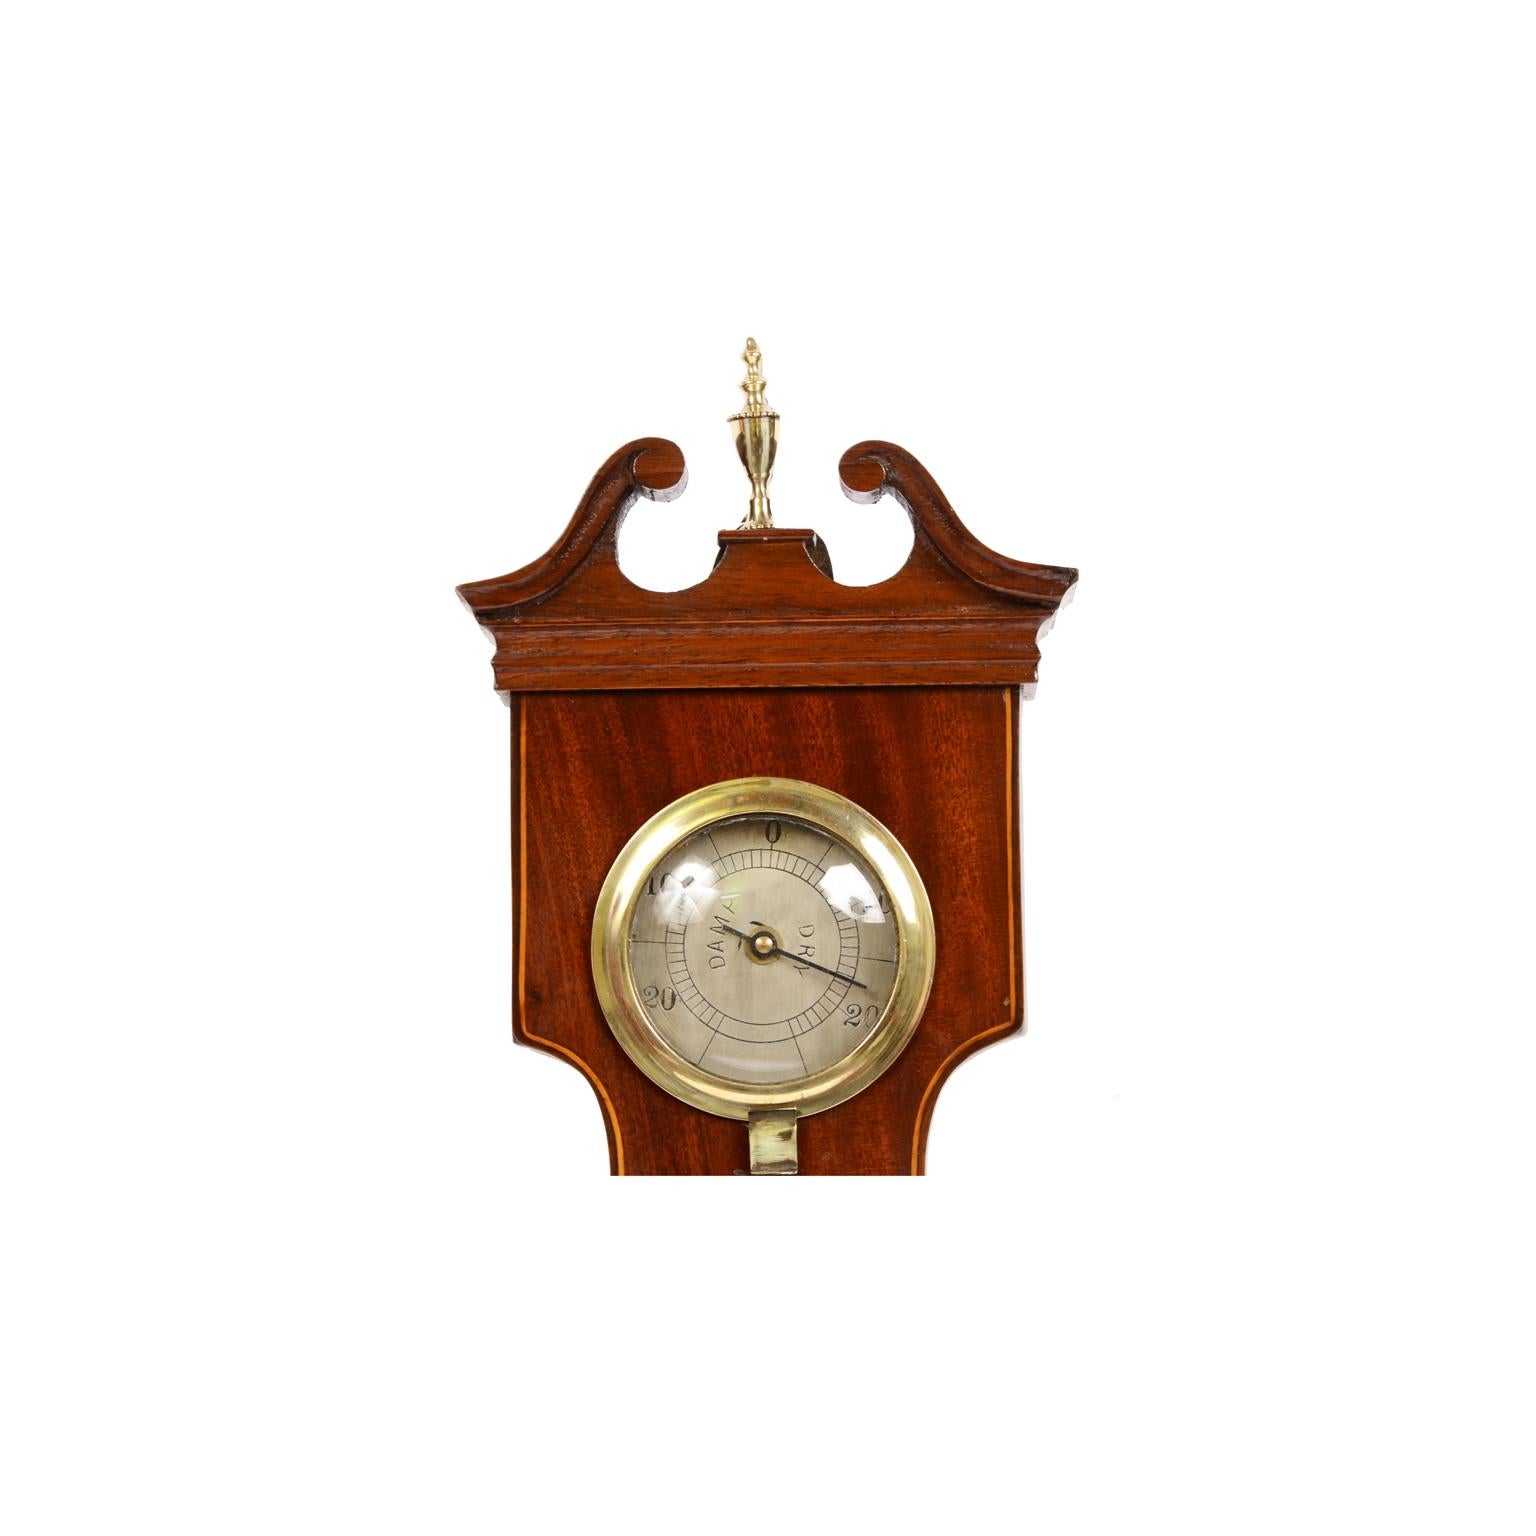 1850 Ciceri and Pini Mahogany Barometer Antique Weather Measuring Instrument  1